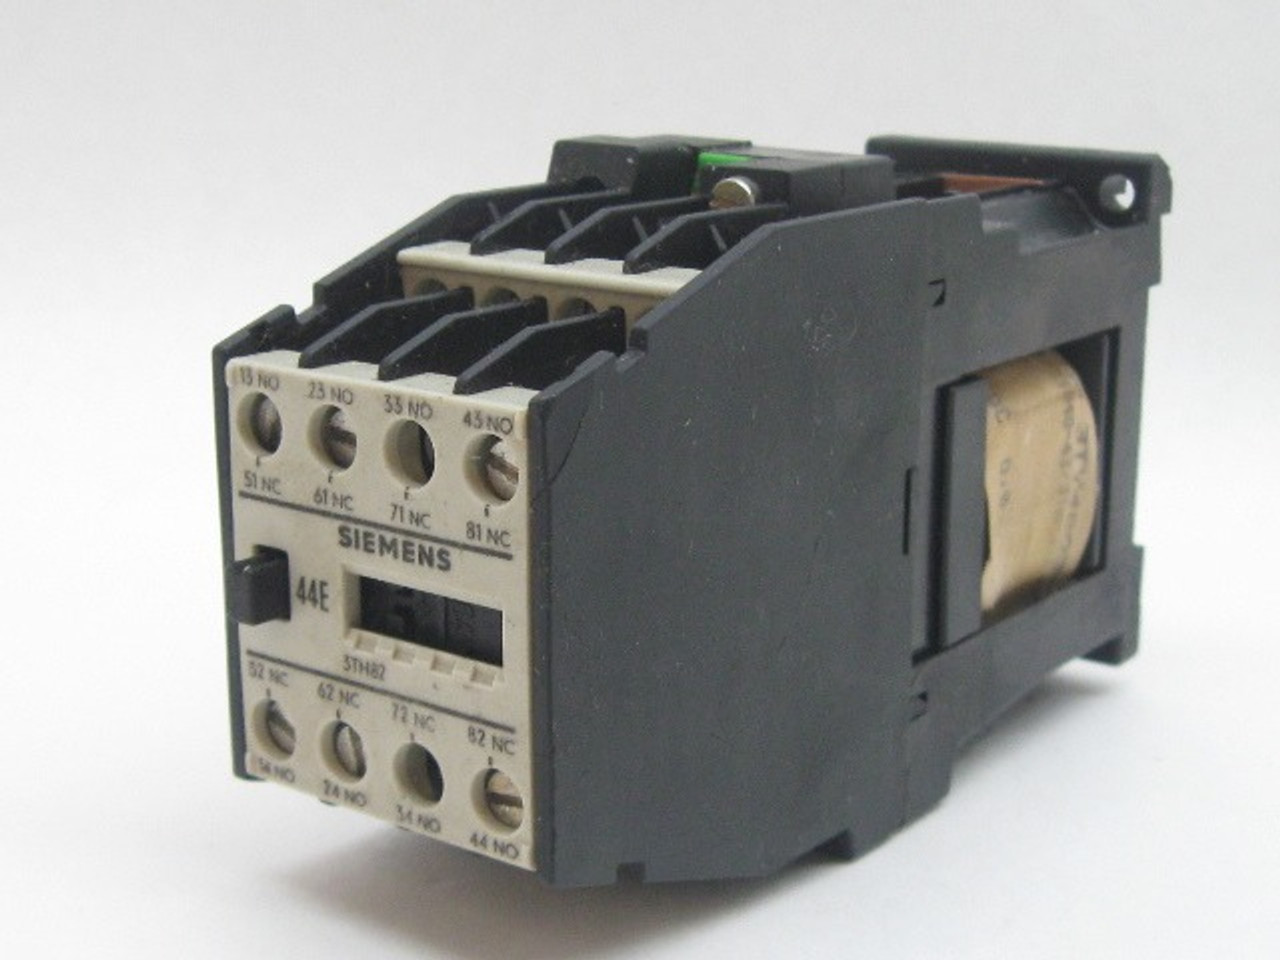 Siemens 3TH82 44-3B Contactor 24VDC Coil Voltage